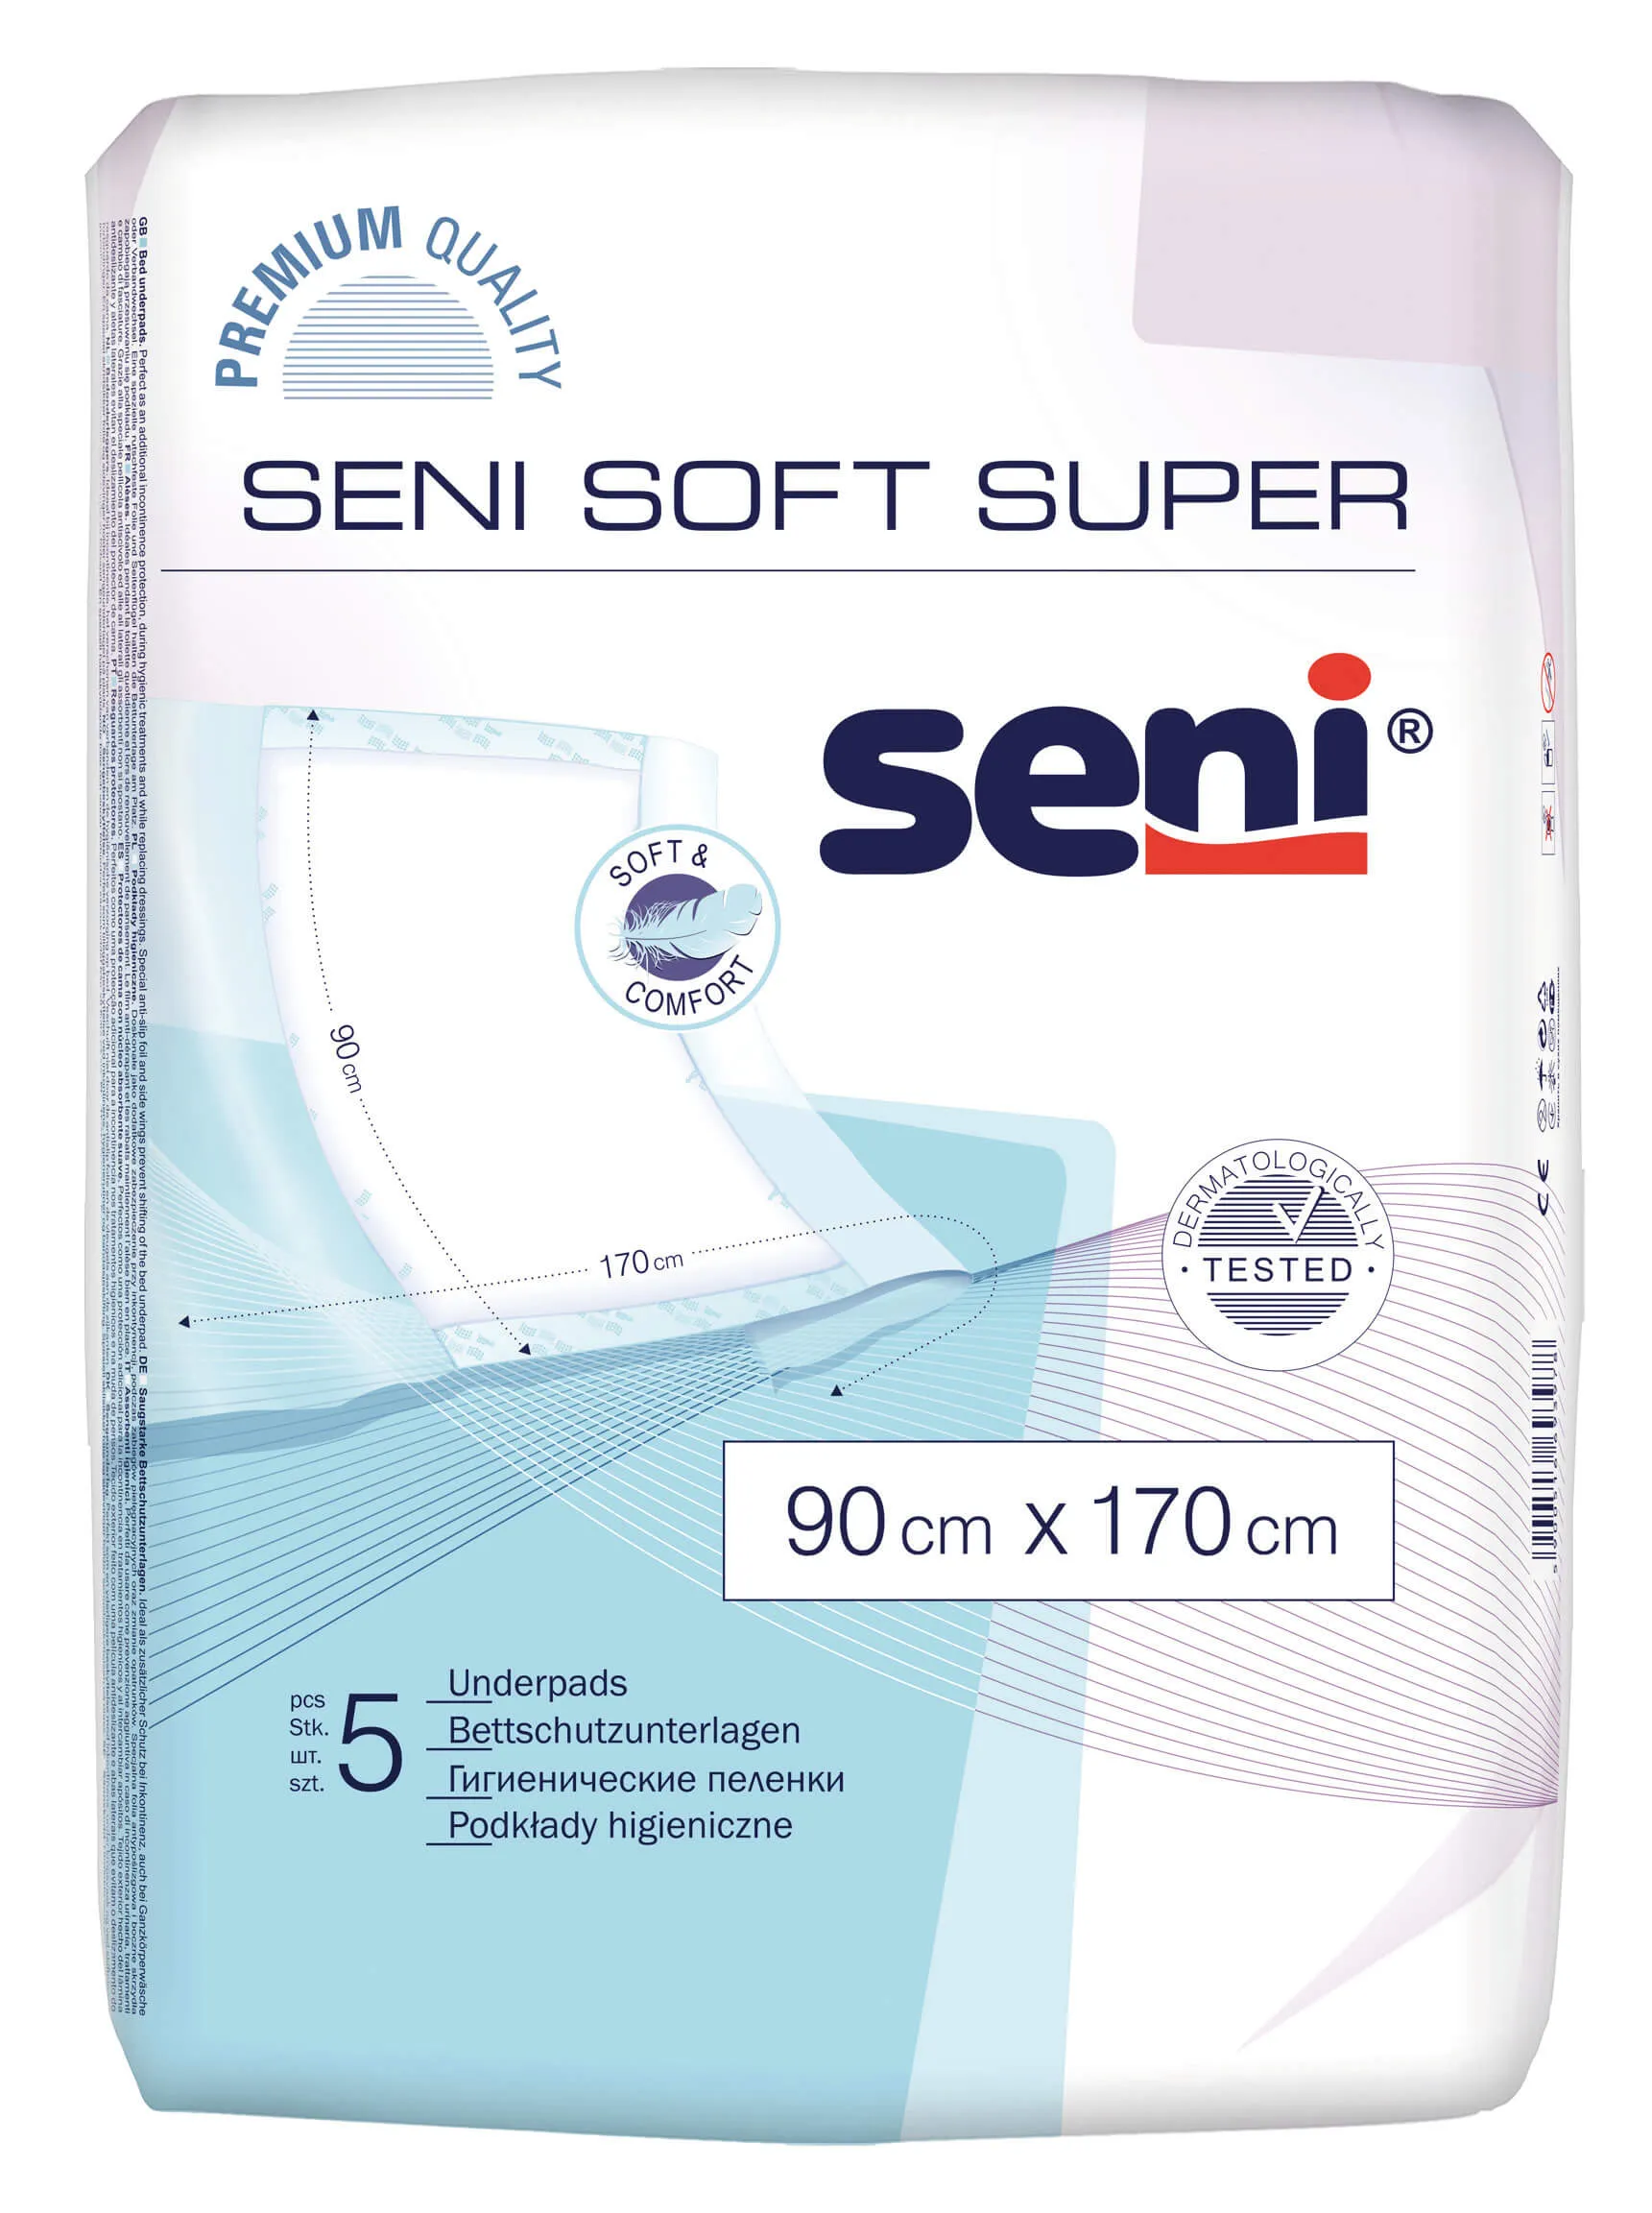 Seni Soft Super, podkłady higieniczne, 90x170 cm, 5 sztuk